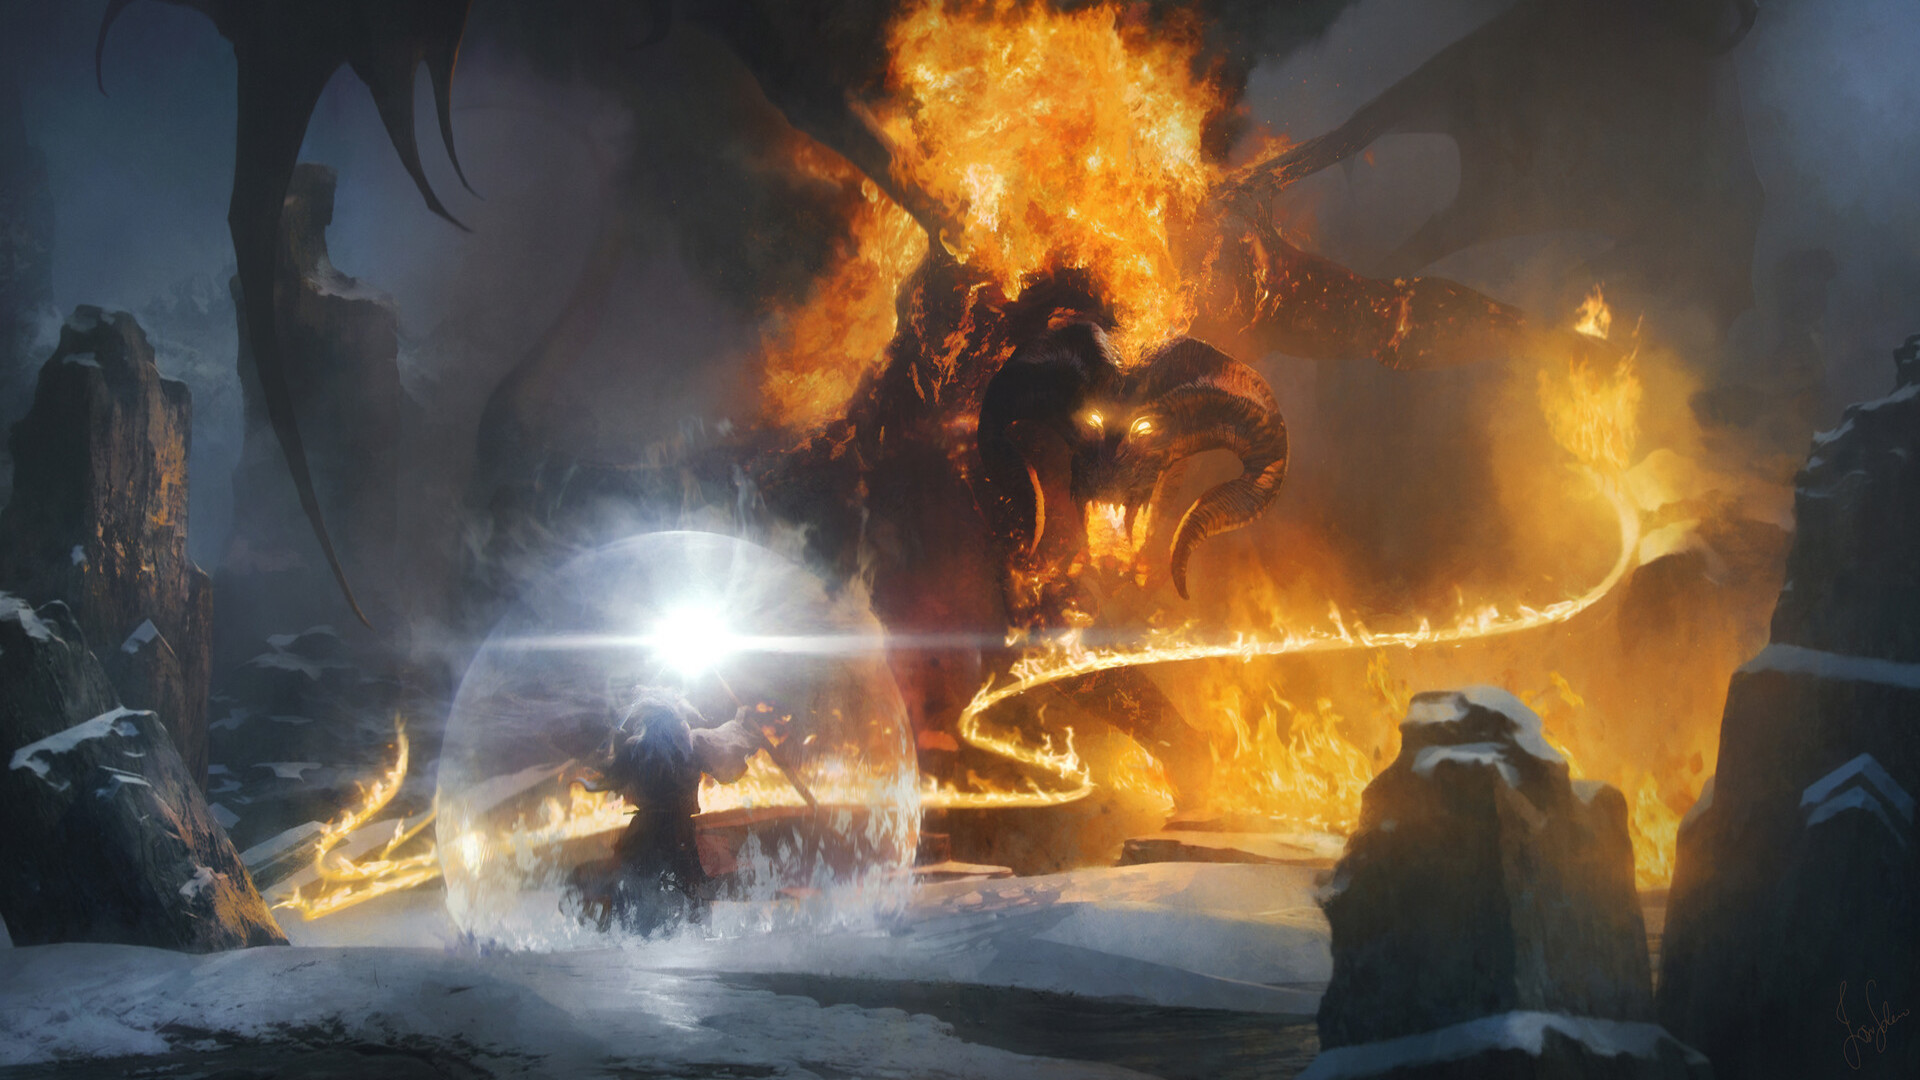 Digital Digital Art Artwork Fantasy Art Lights Fire The Lord Of The Rings Battle Magic Winter Snow A 1920x1080